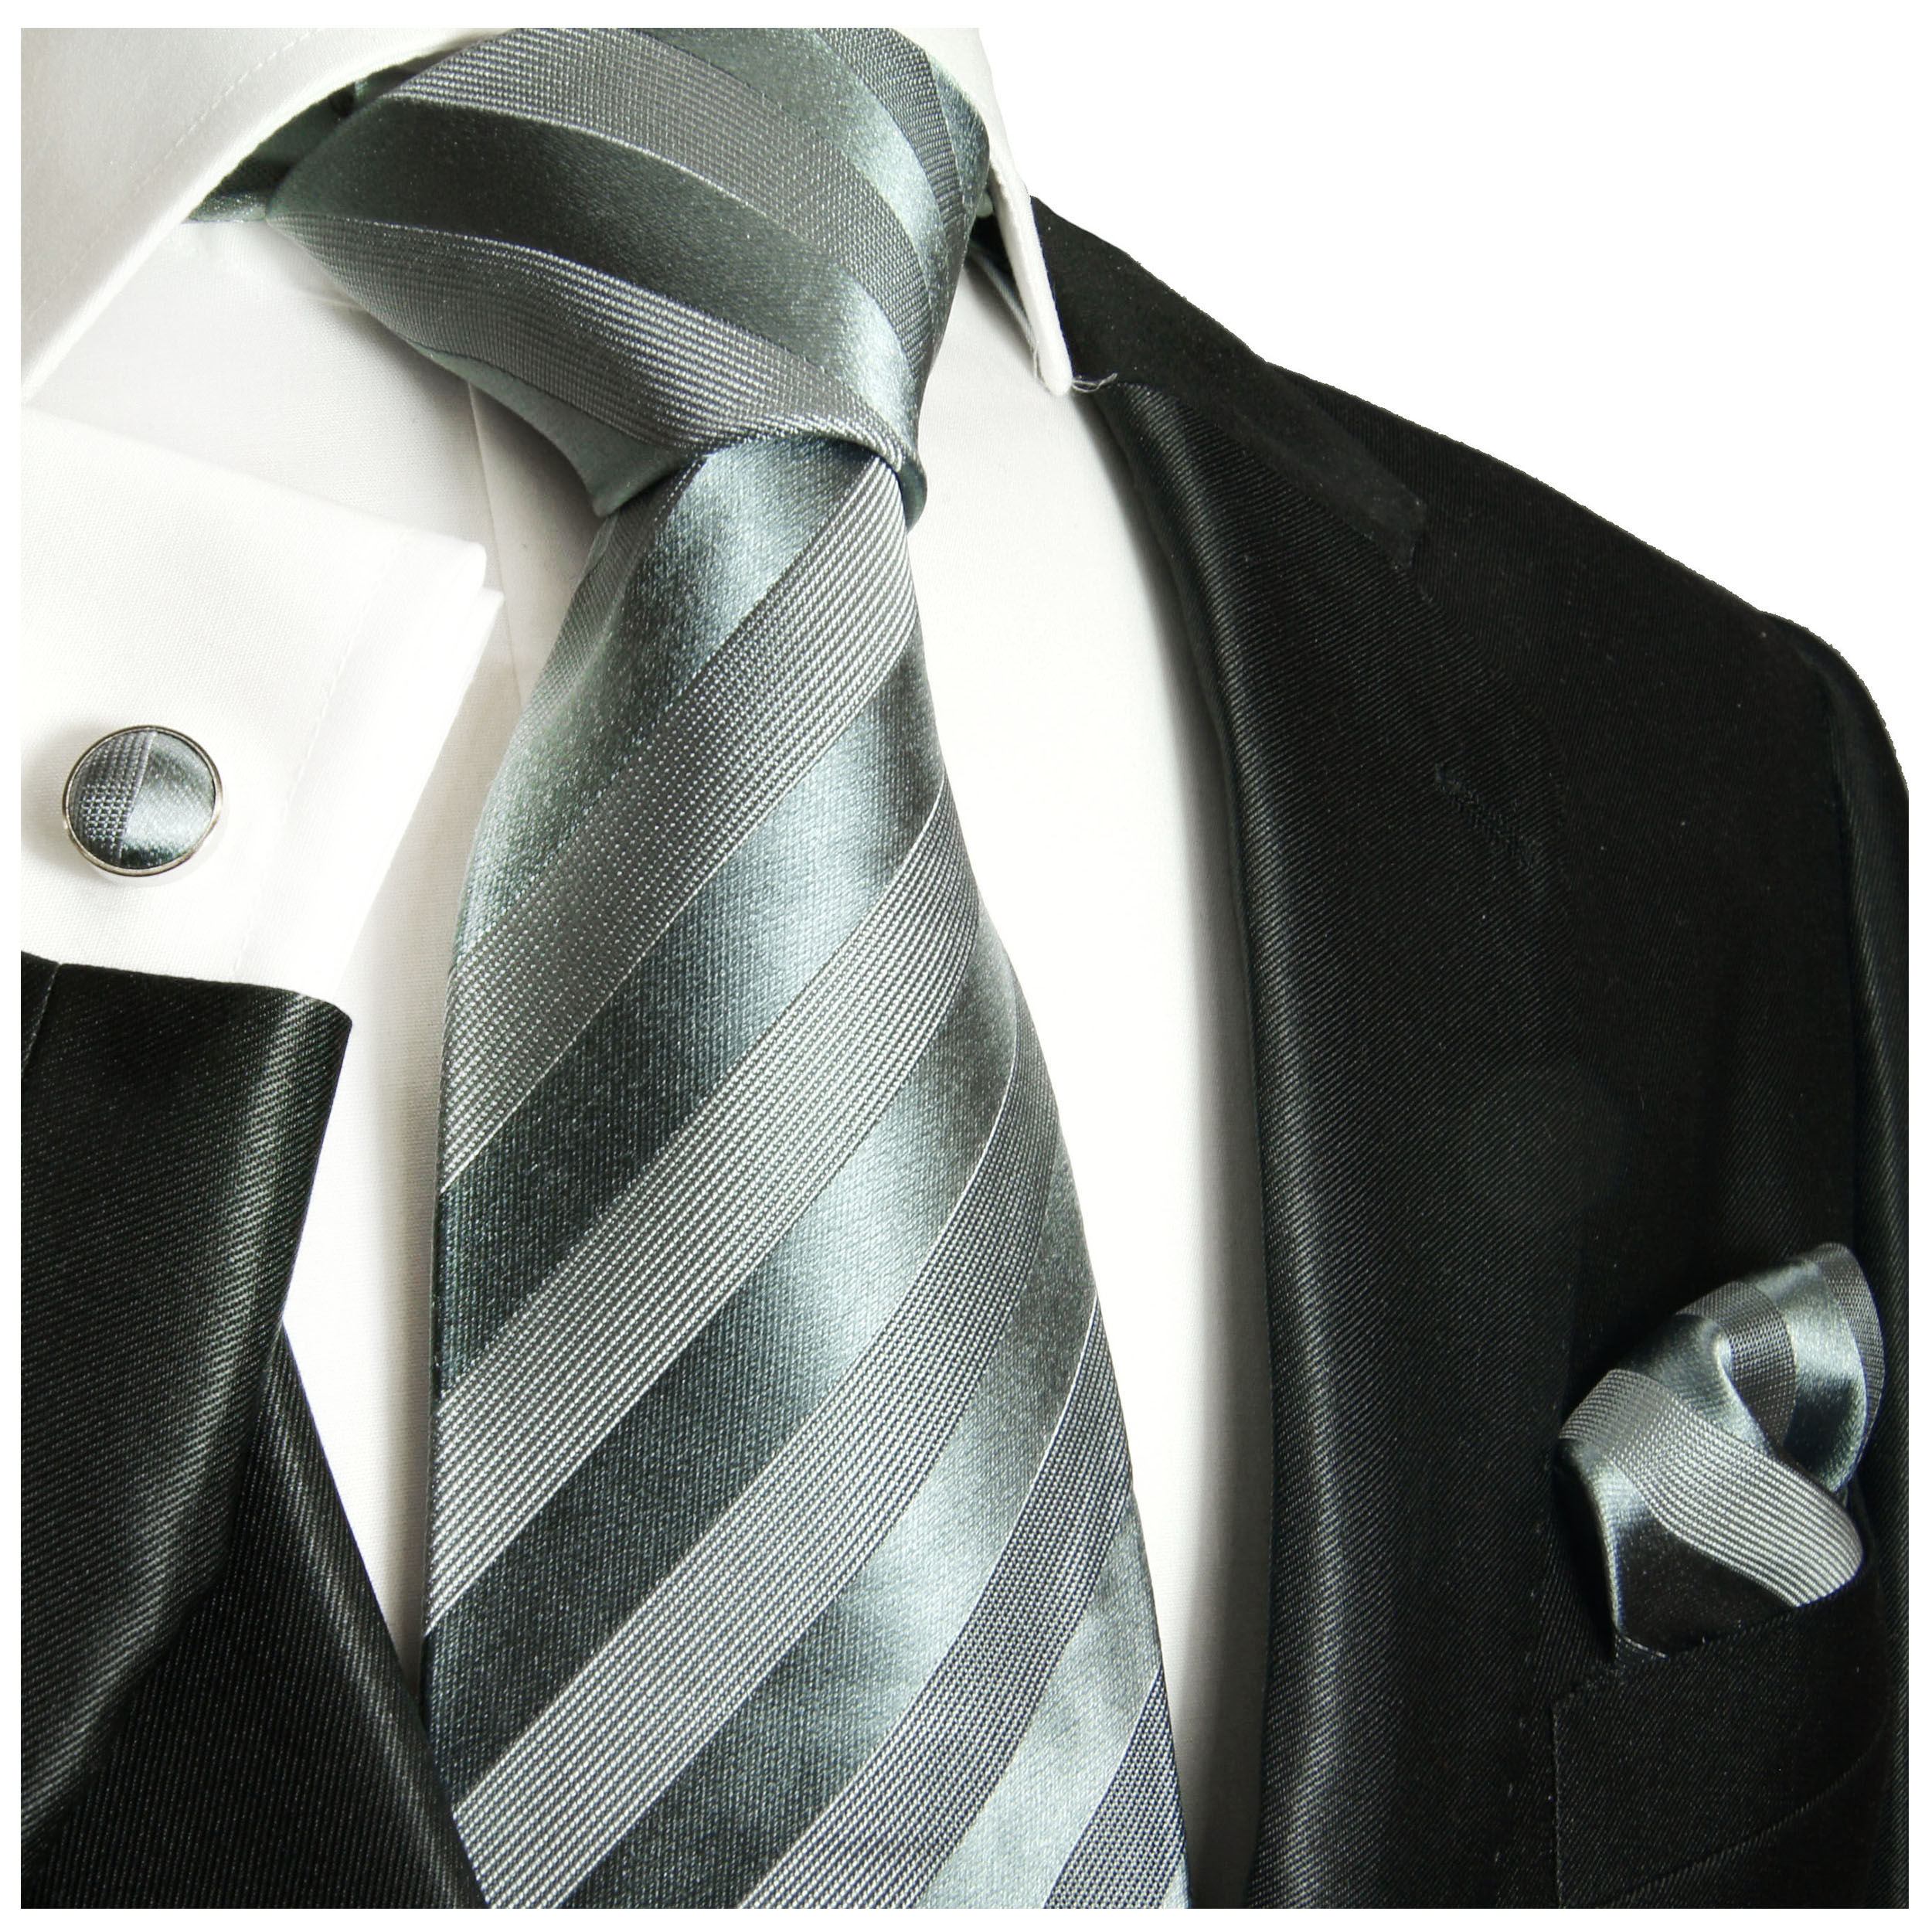 Krawatte silber grau gestreift 811 | HIER BESTELLEN - Paul Malone Shop